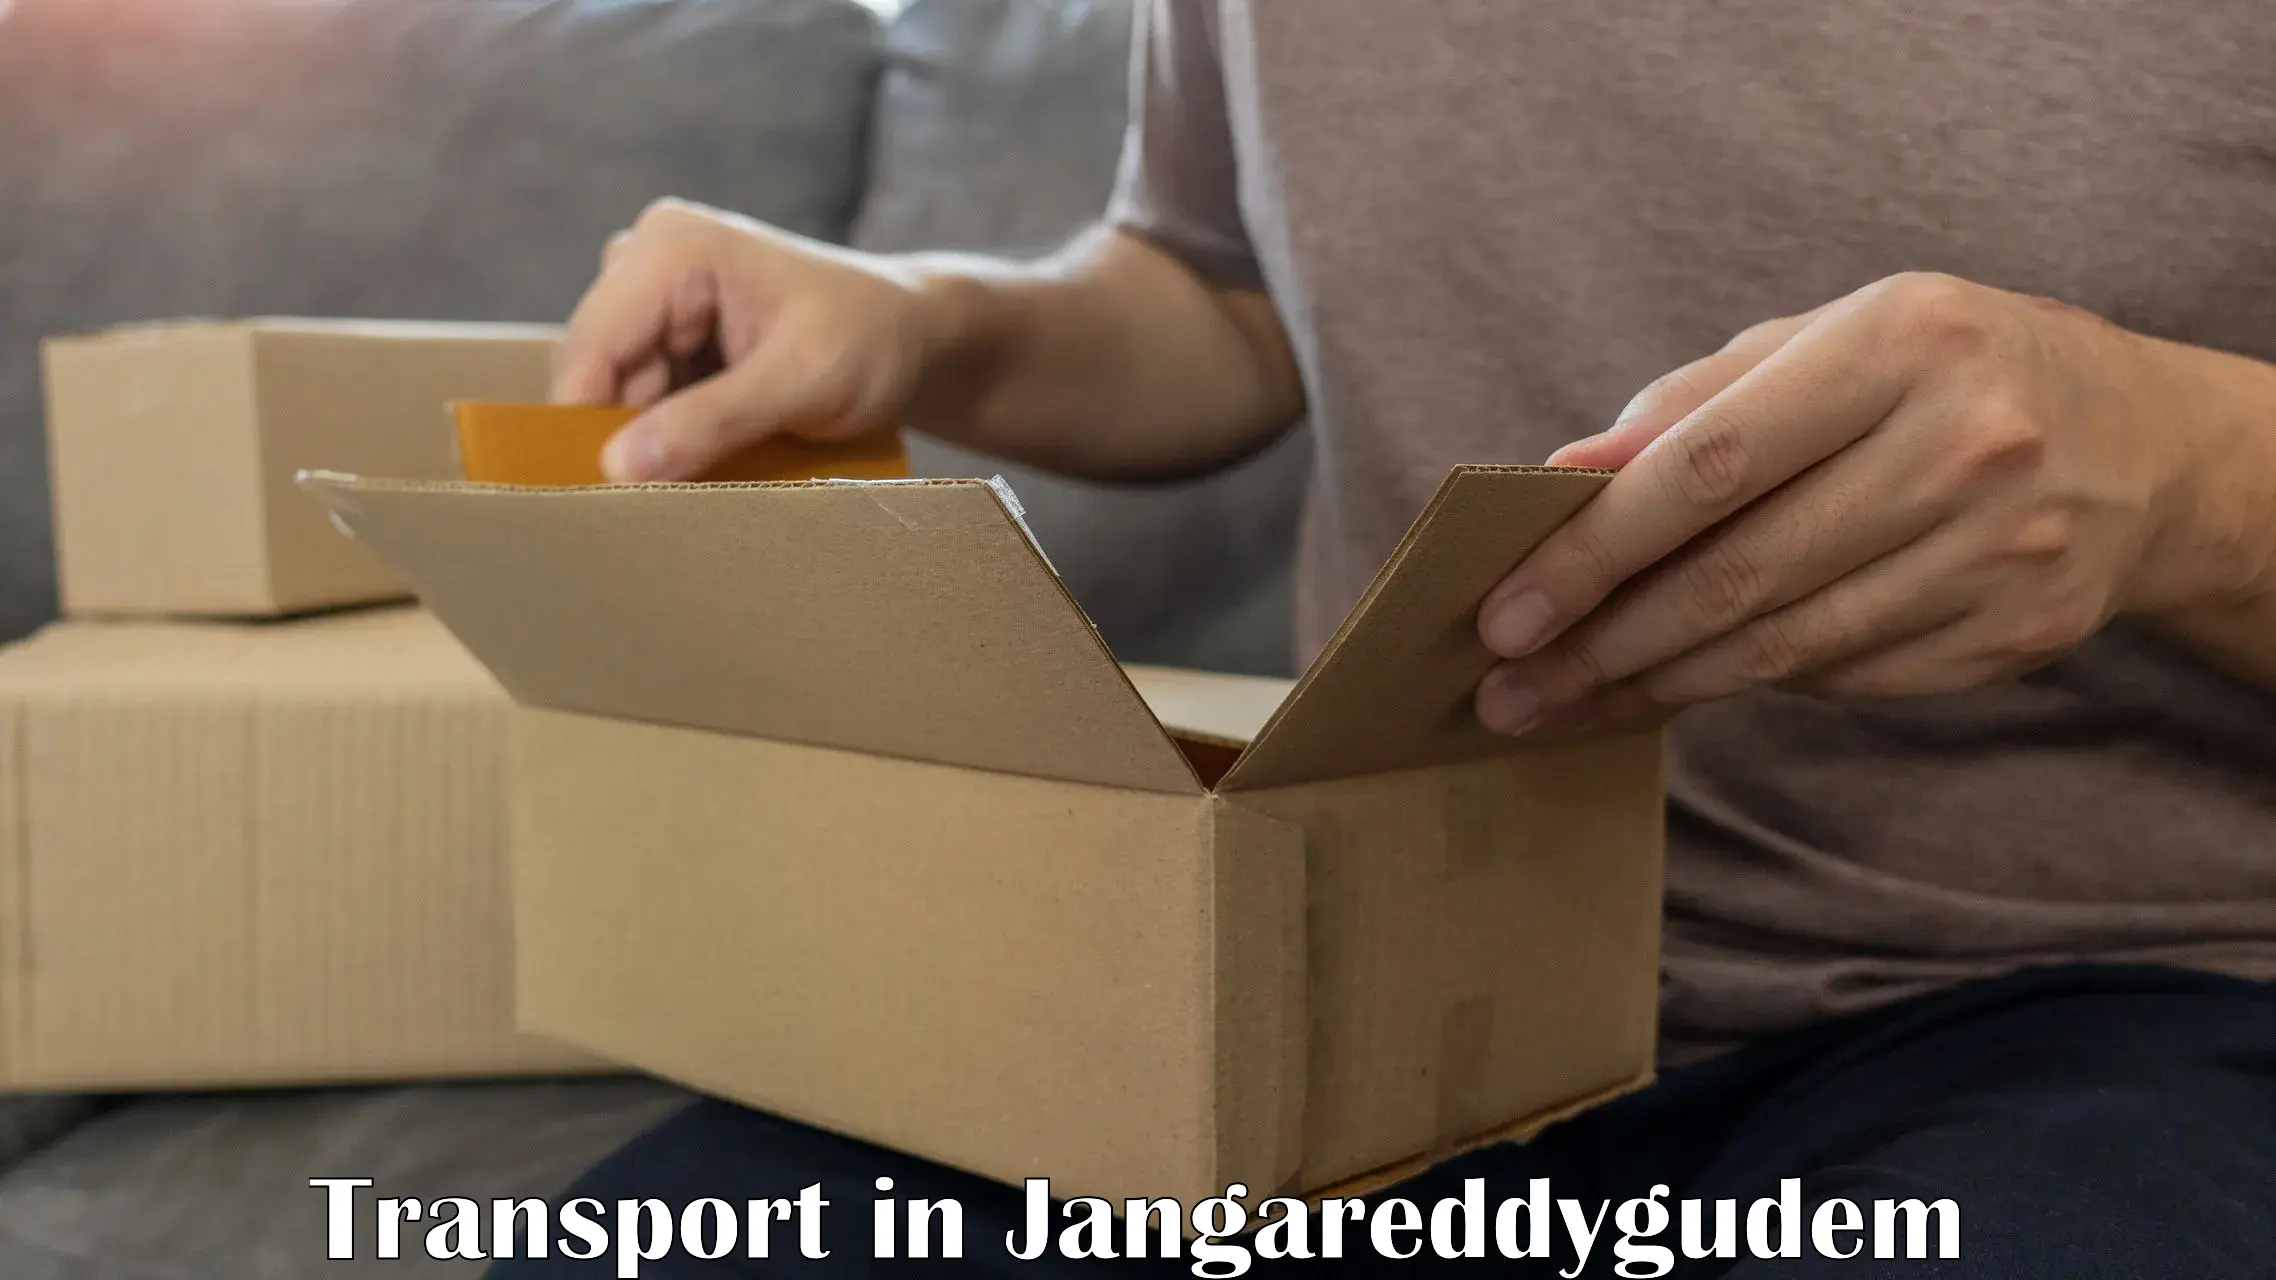 Furniture transport service in Jangareddygudem